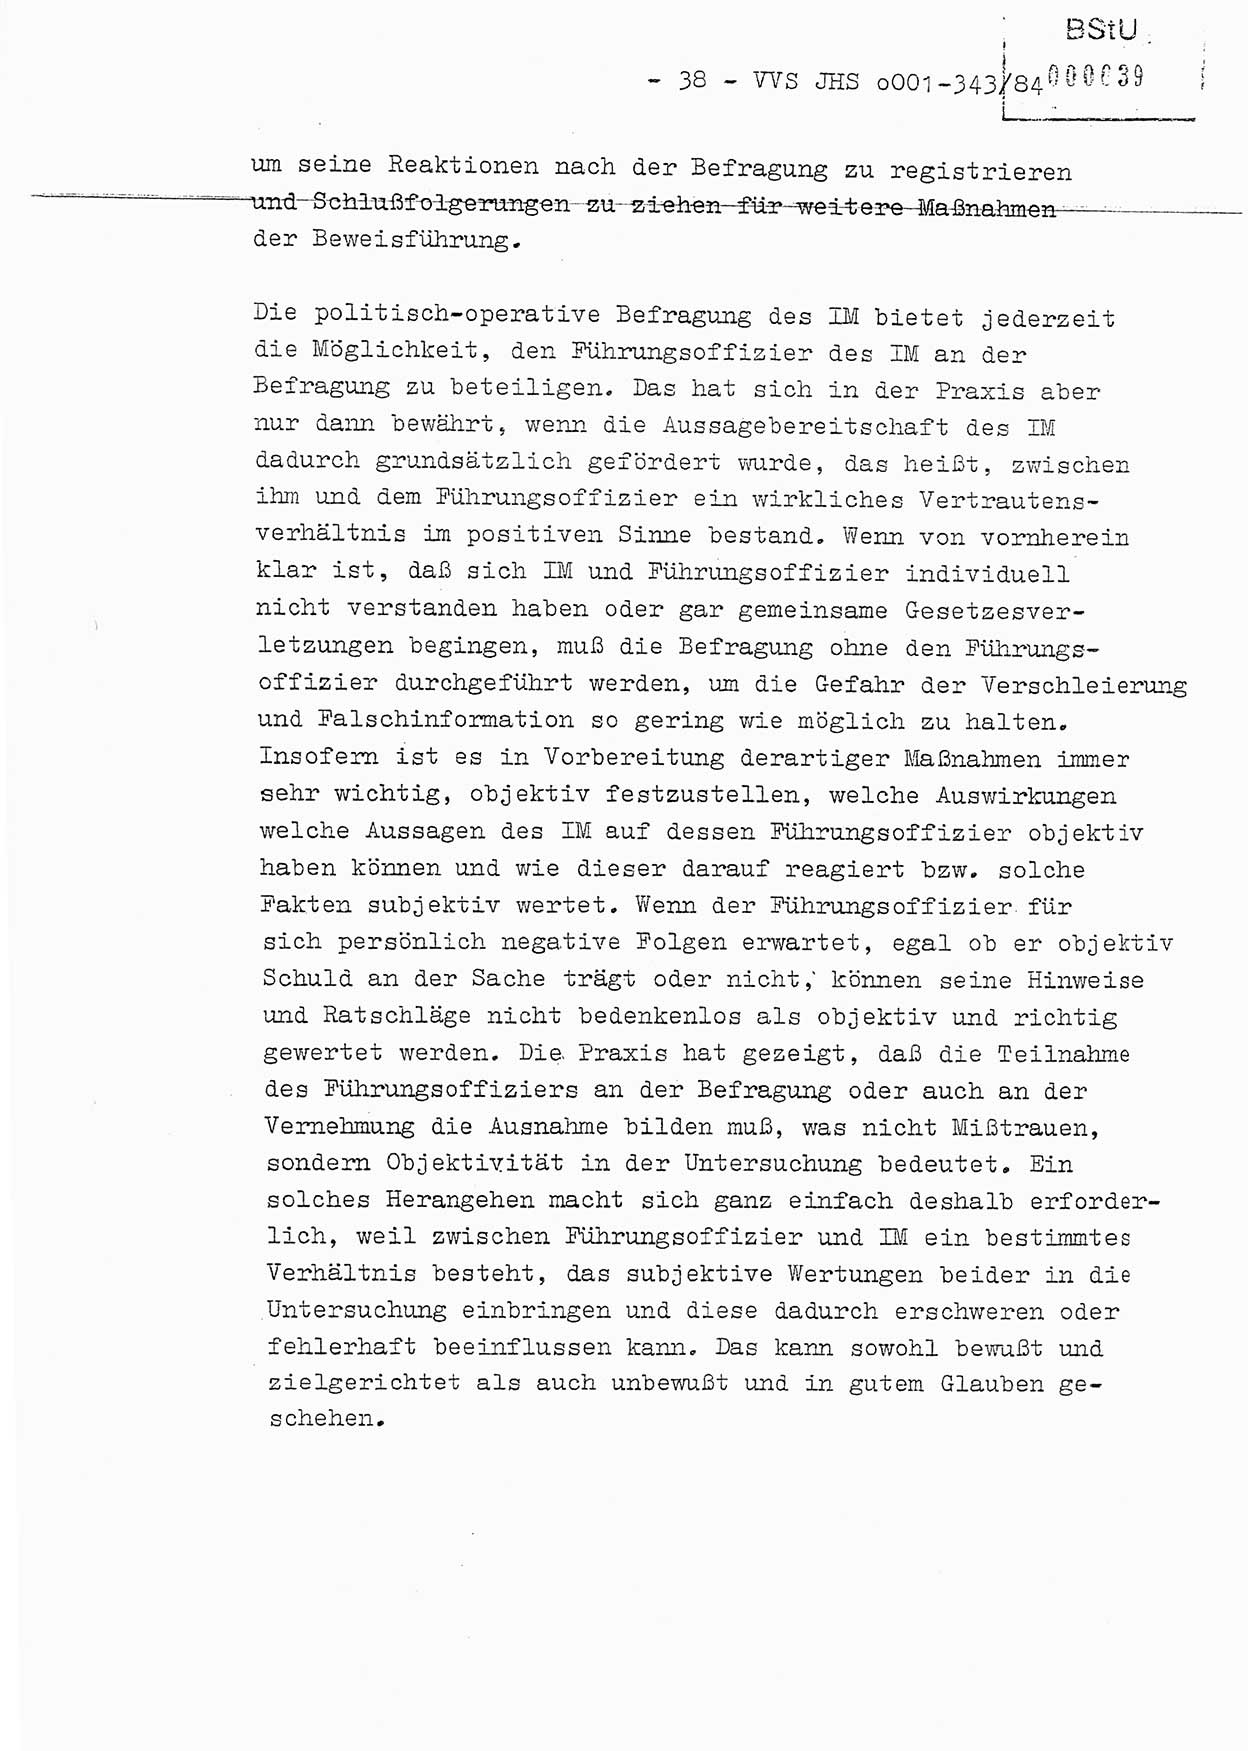 Diplomarbeit, Oberleutnant Bernd Michael (HA Ⅸ/5), Oberleutnant Peter Felber (HA IX/5), Ministerium für Staatssicherheit (MfS) [Deutsche Demokratische Republik (DDR)], Juristische Hochschule (JHS), Vertrauliche Verschlußsache (VVS) o001-343/84, Potsdam 1985, Seite 38 (Dipl.-Arb. MfS DDR JHS VVS o001-343/84 1985, S. 38)